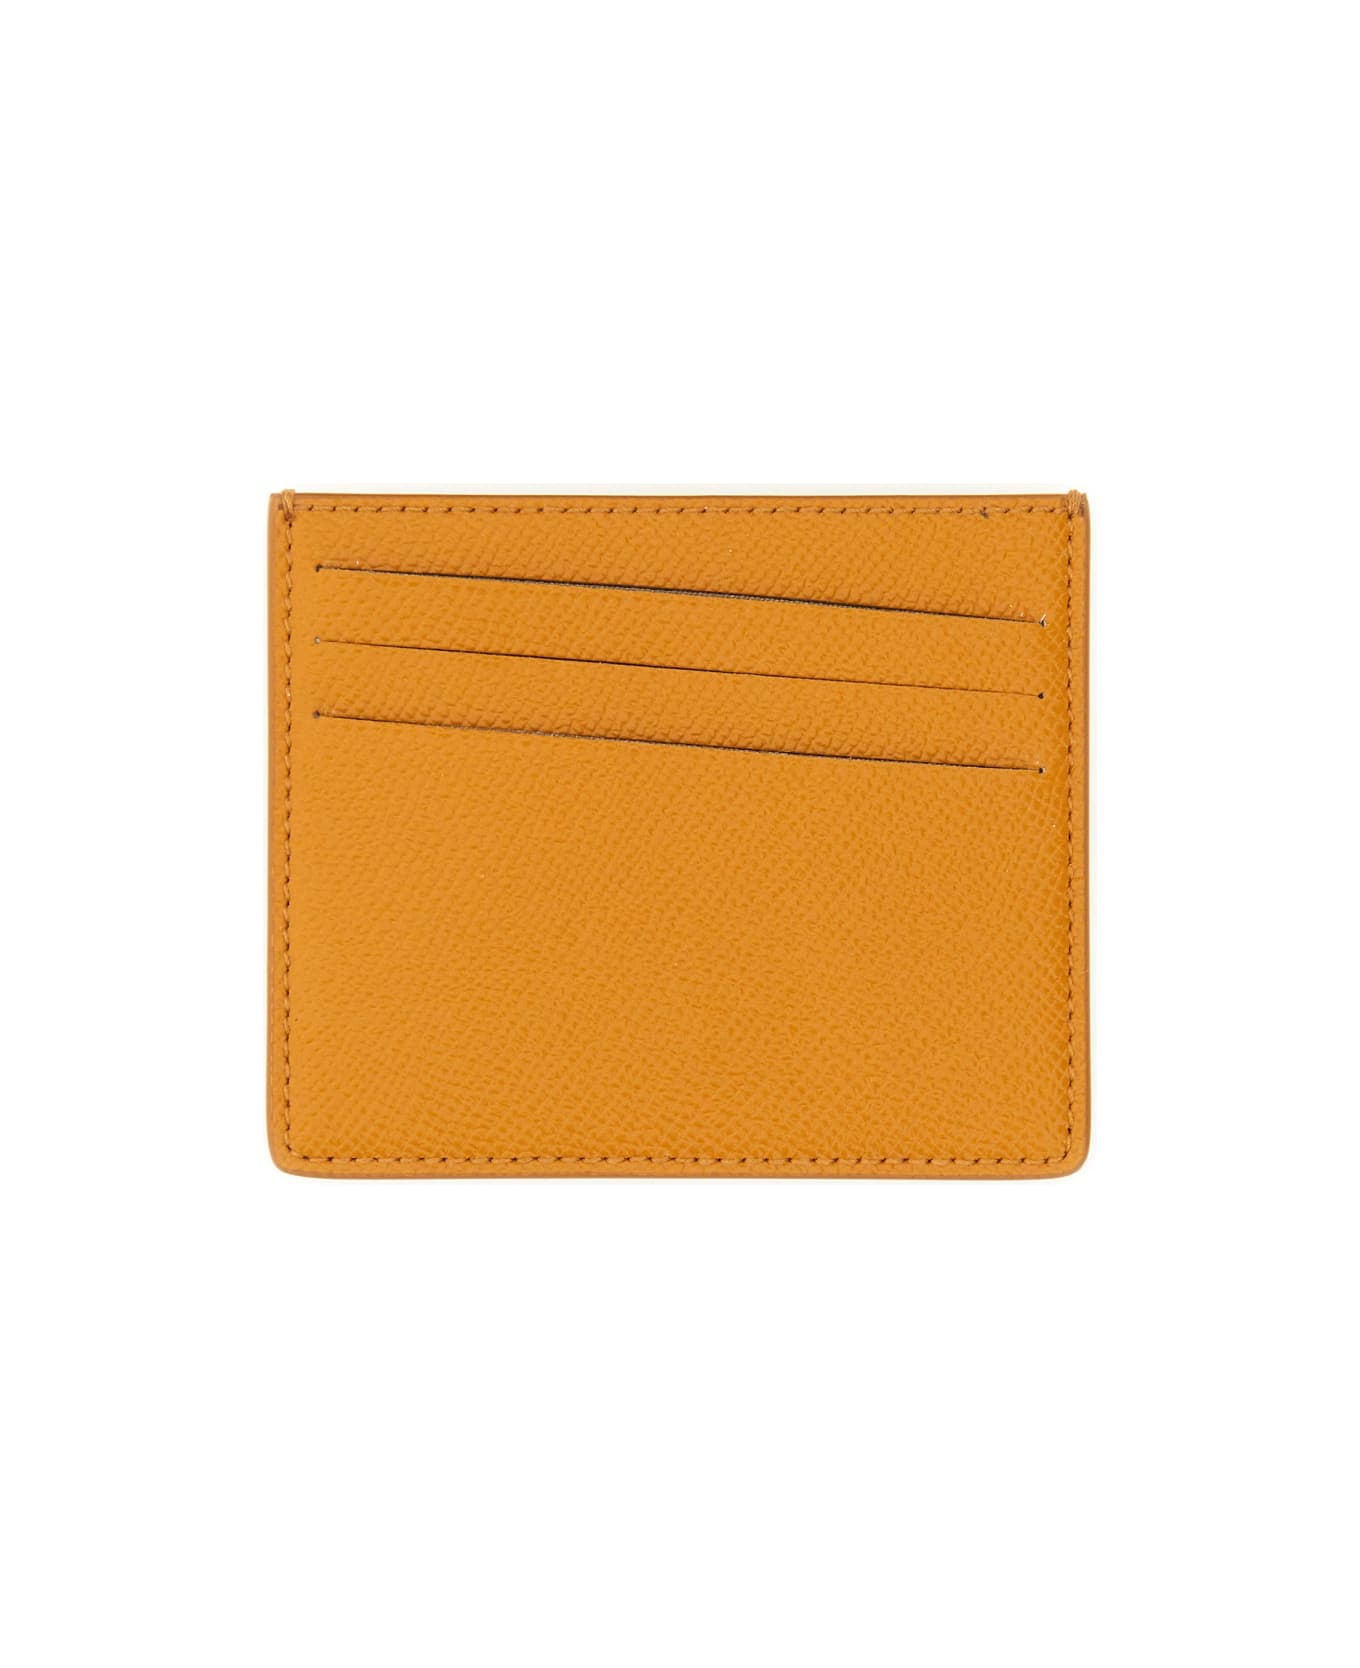 Maison Margiela Leather Card Holder - BUFF